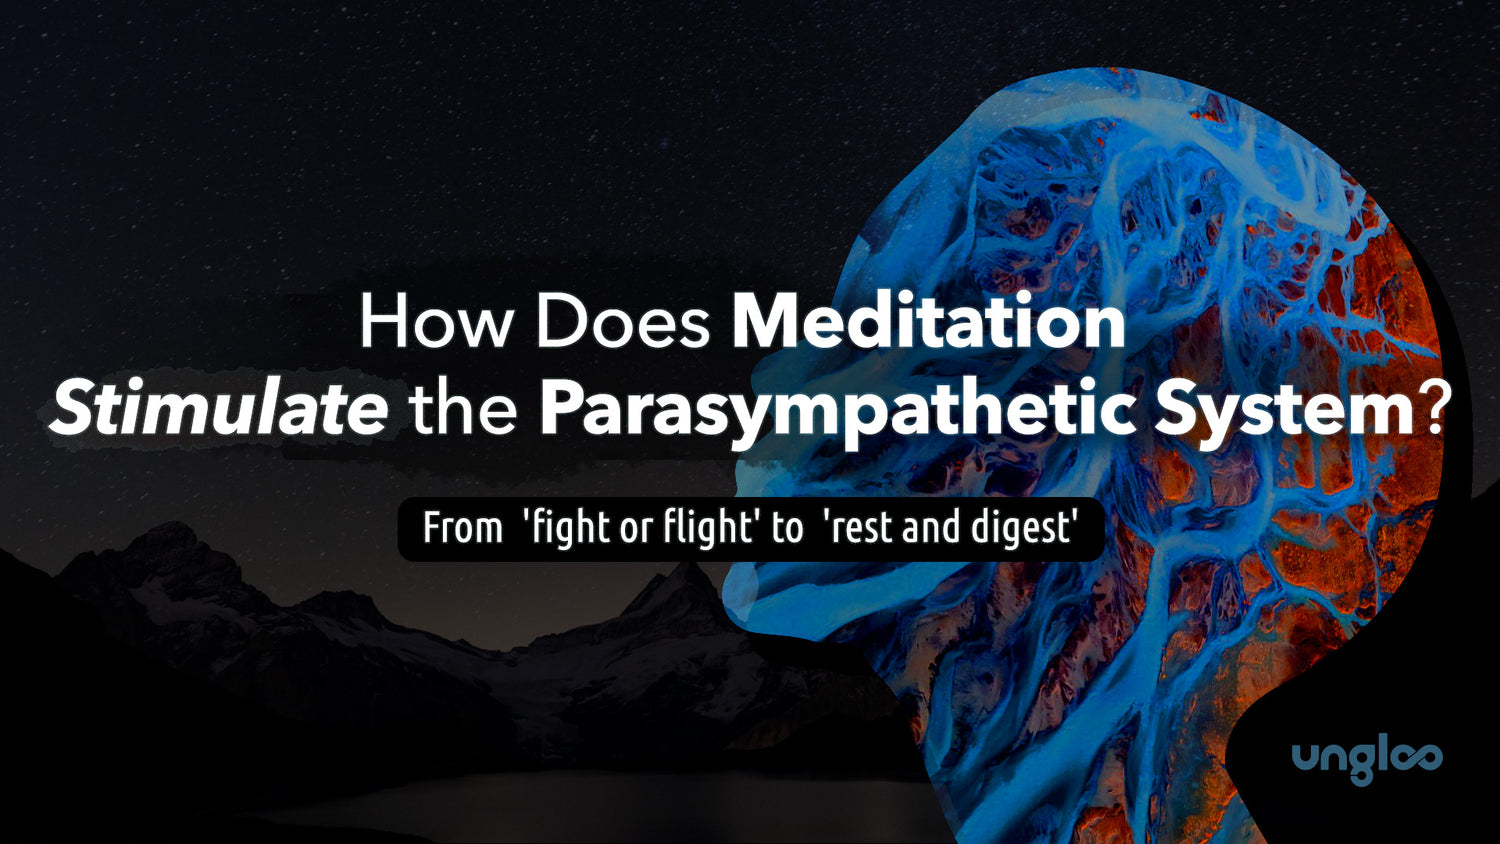 Meditation and the Parasympathetic System